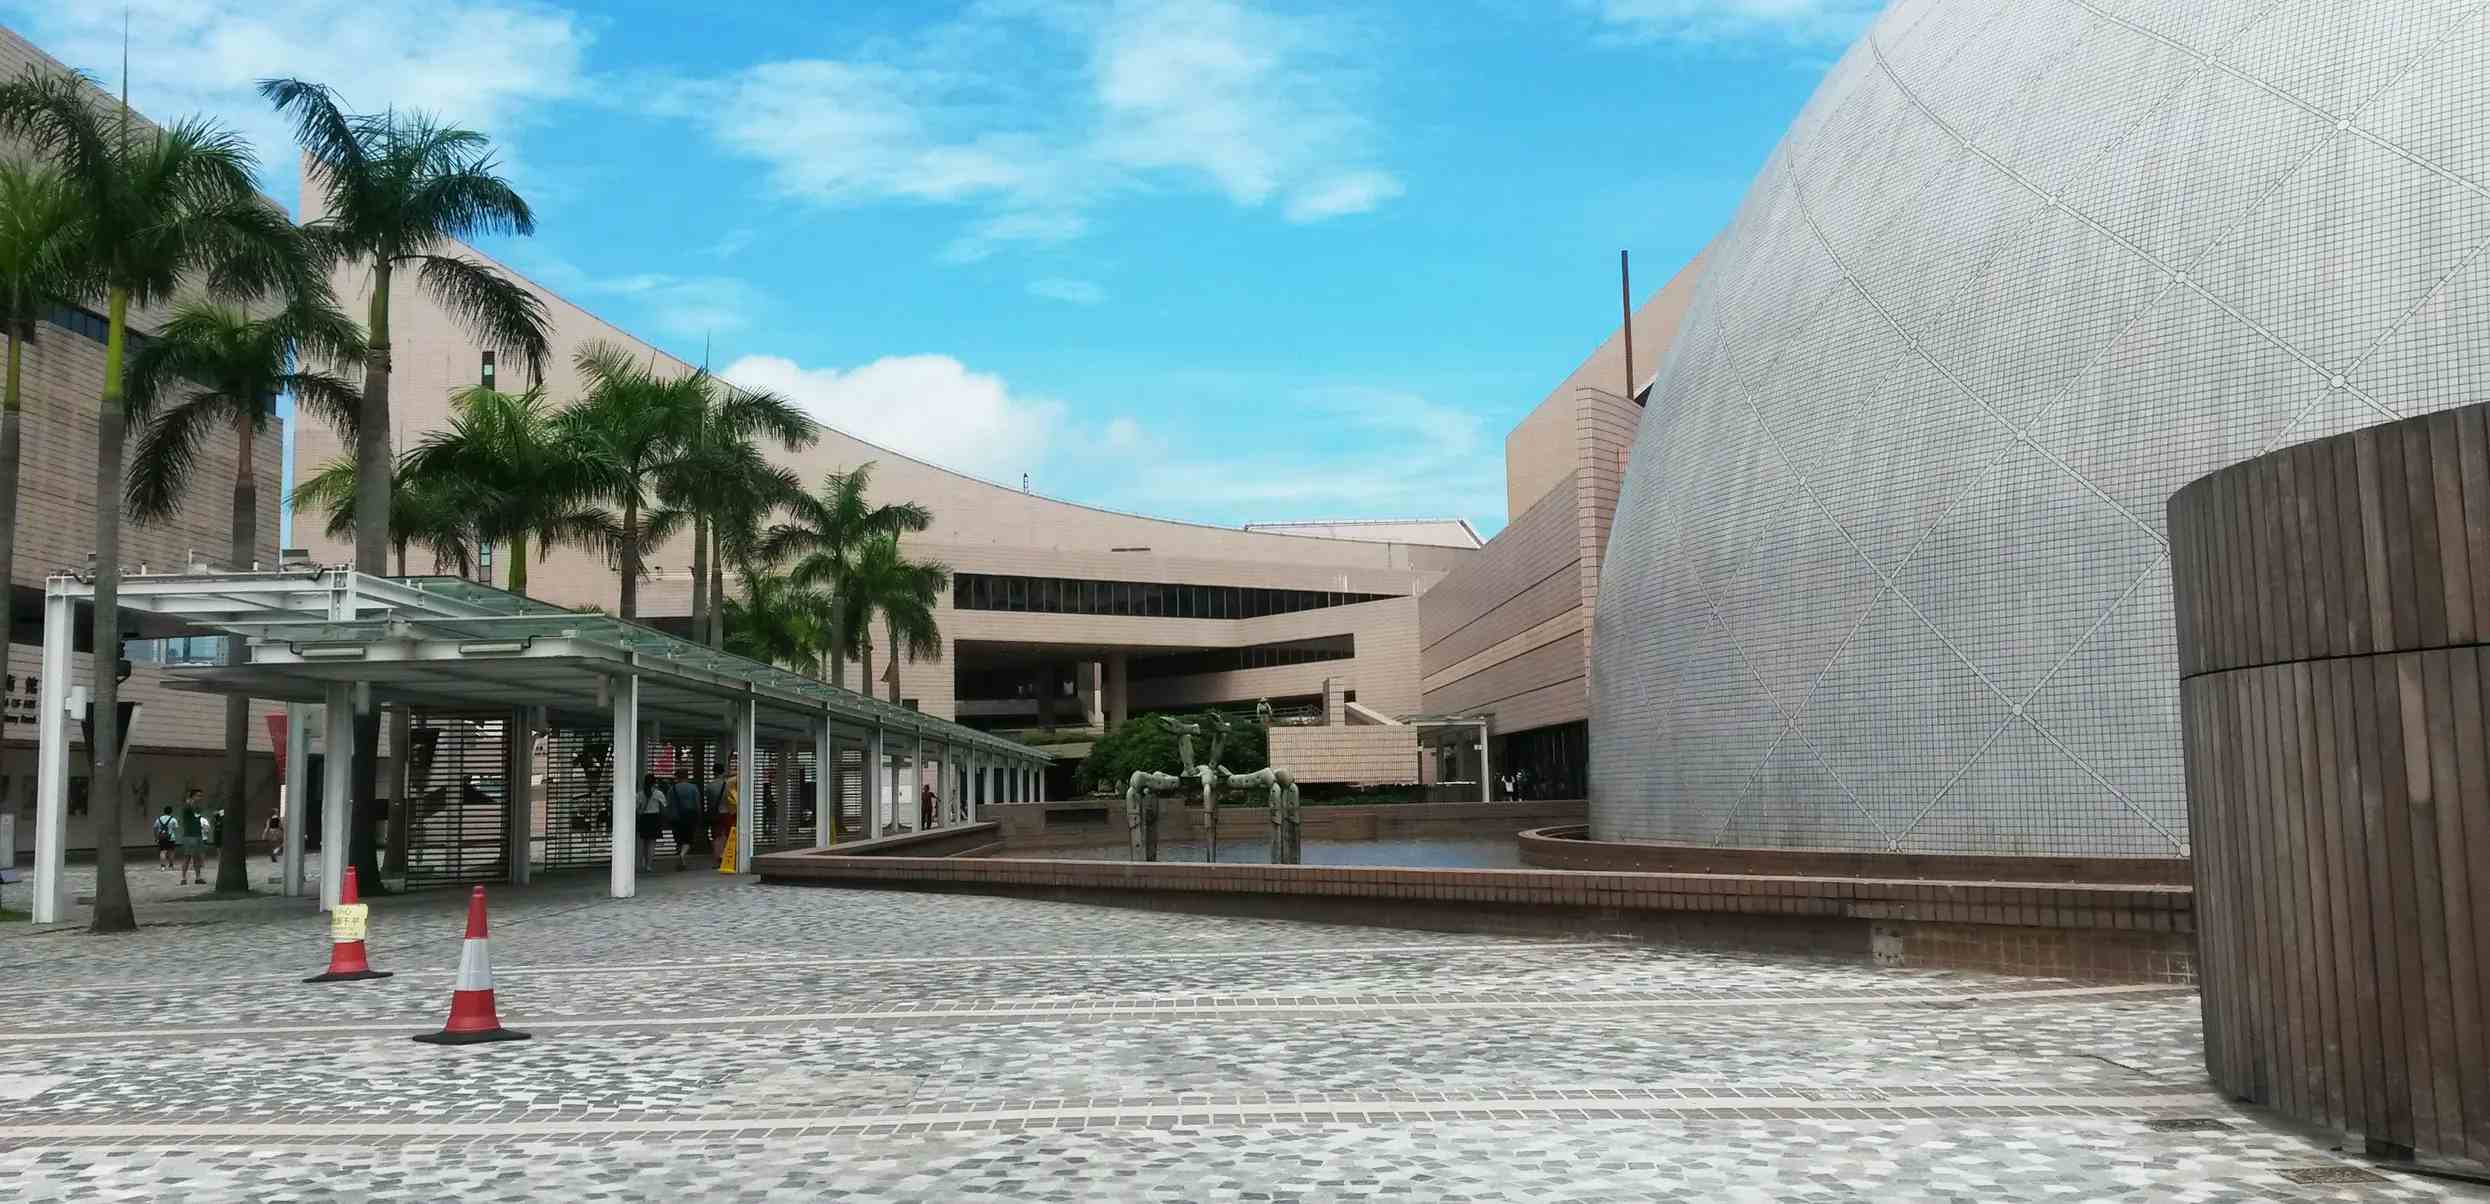 Wissenschaftsmuseum von Hongkong image